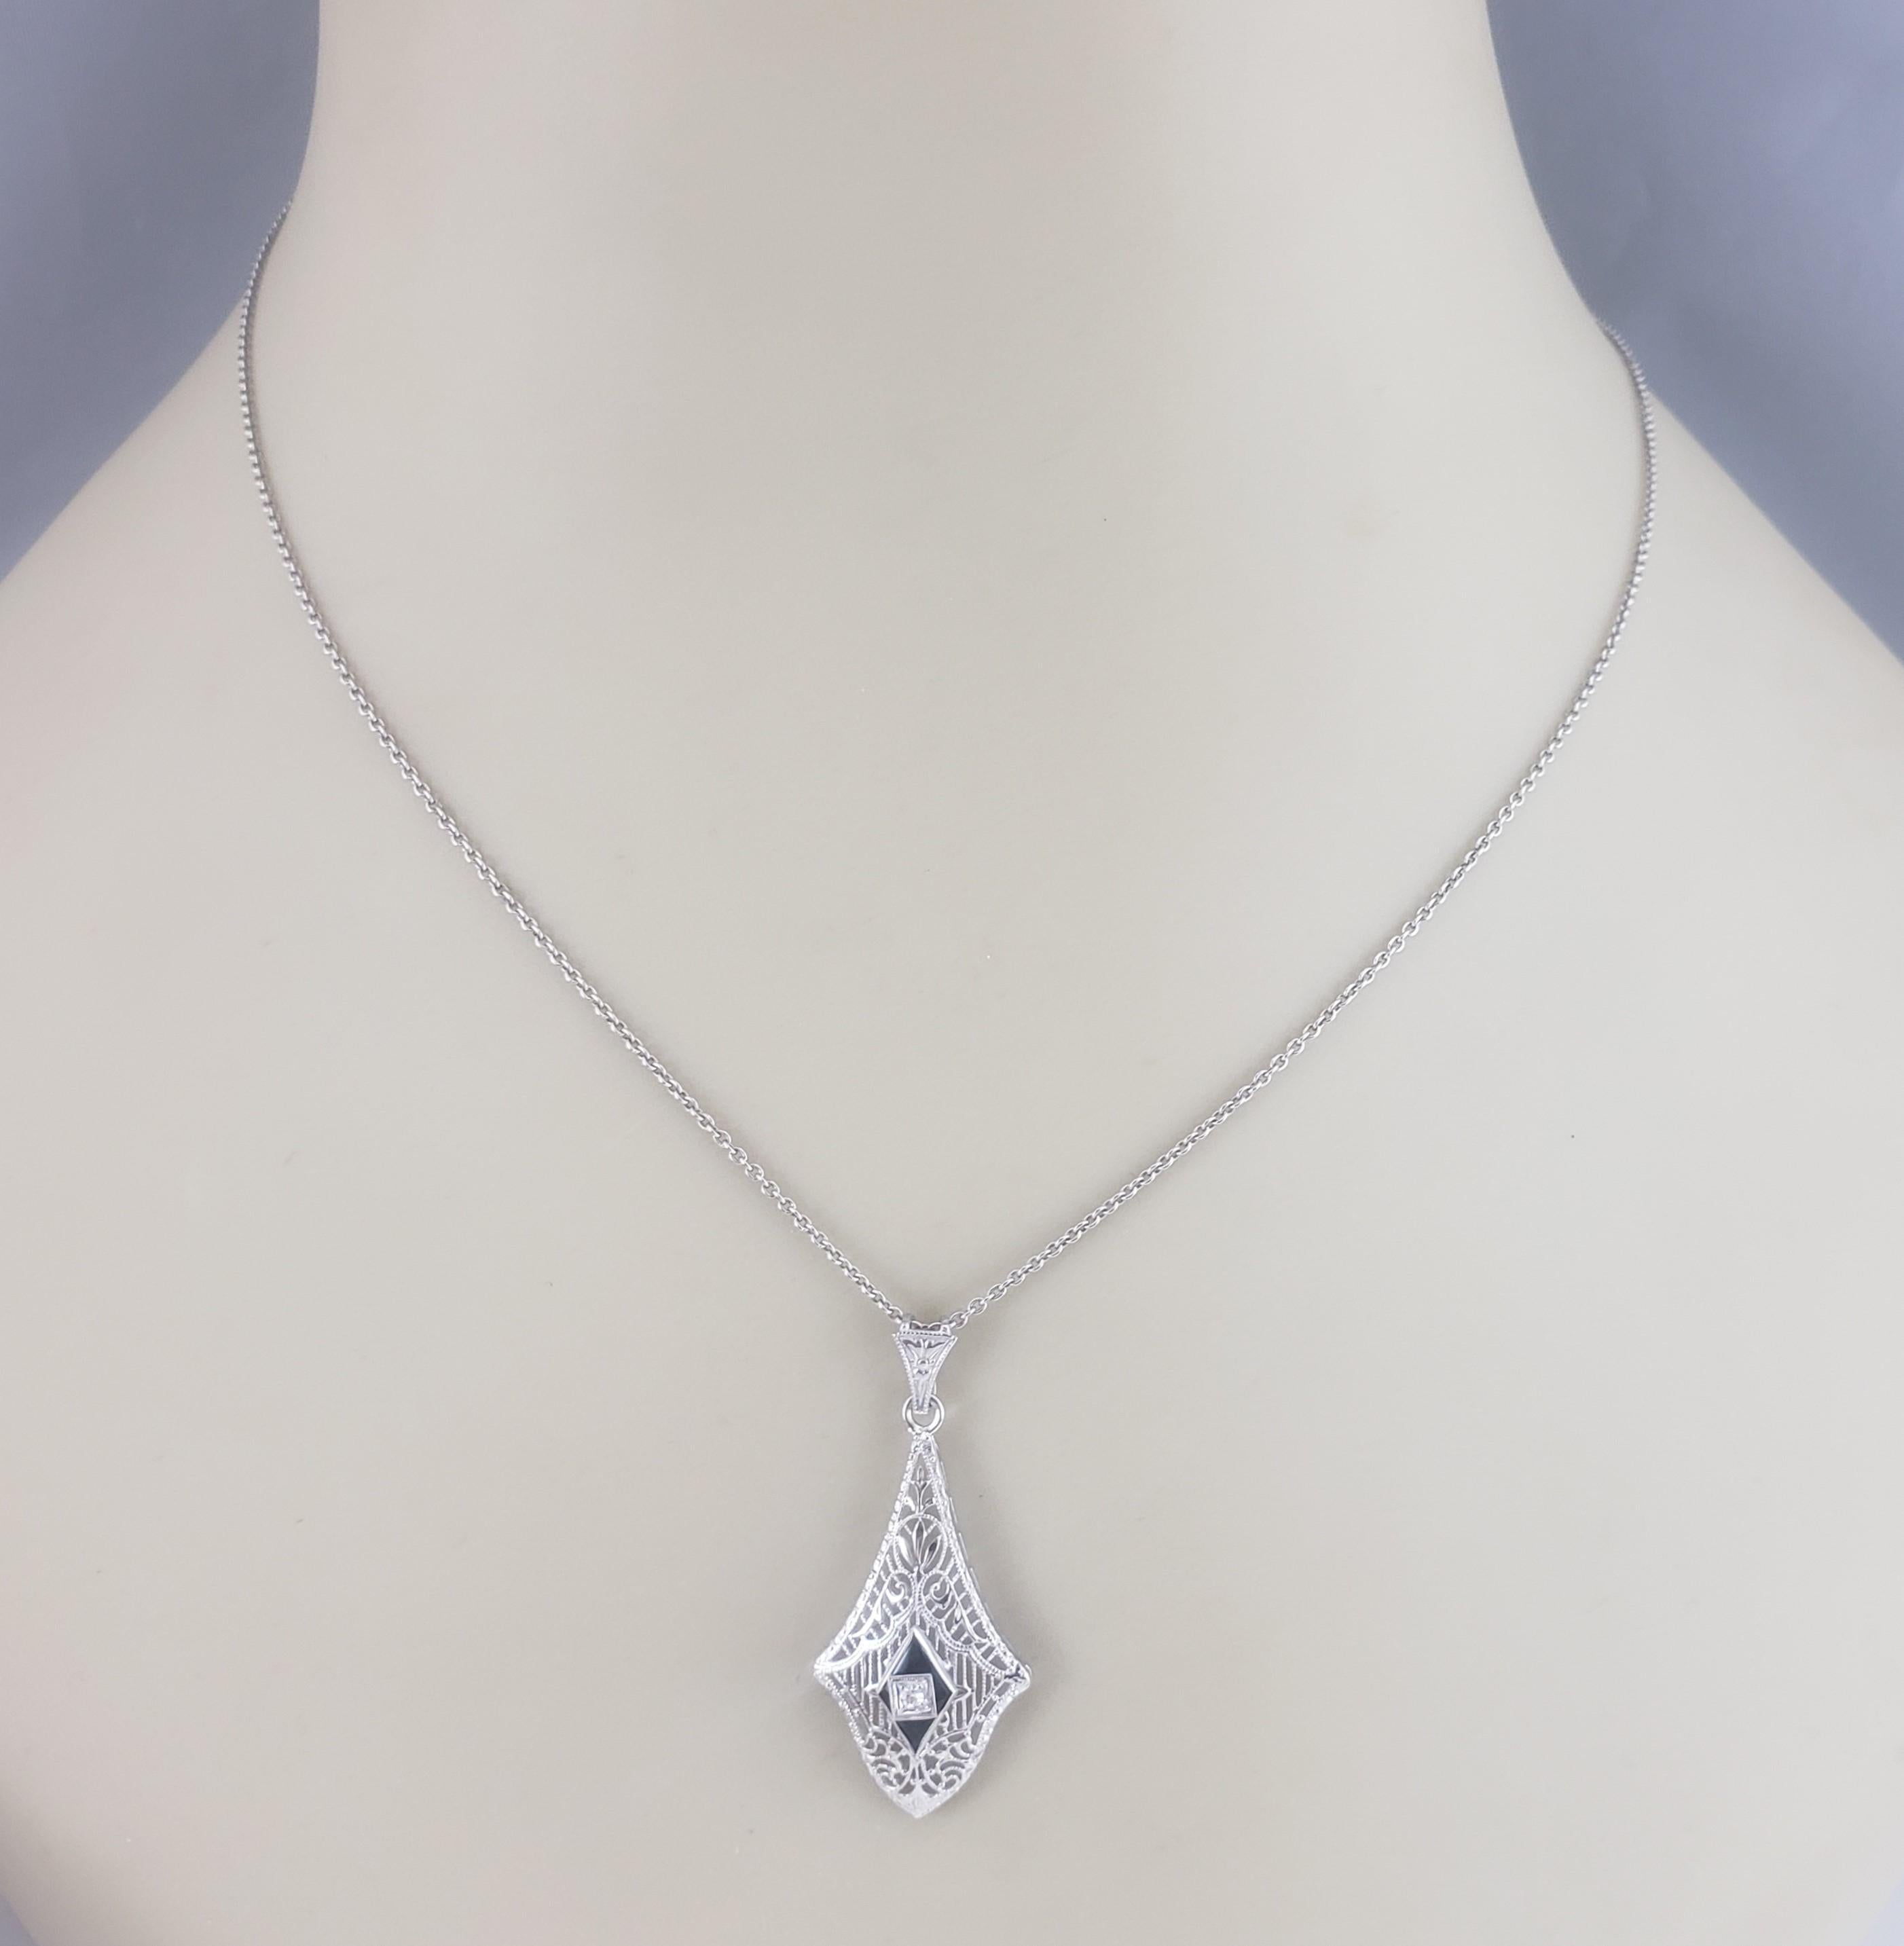 10 Karat White Gold Filigree Onyx and Diamond Pendant #16743 For Sale 1